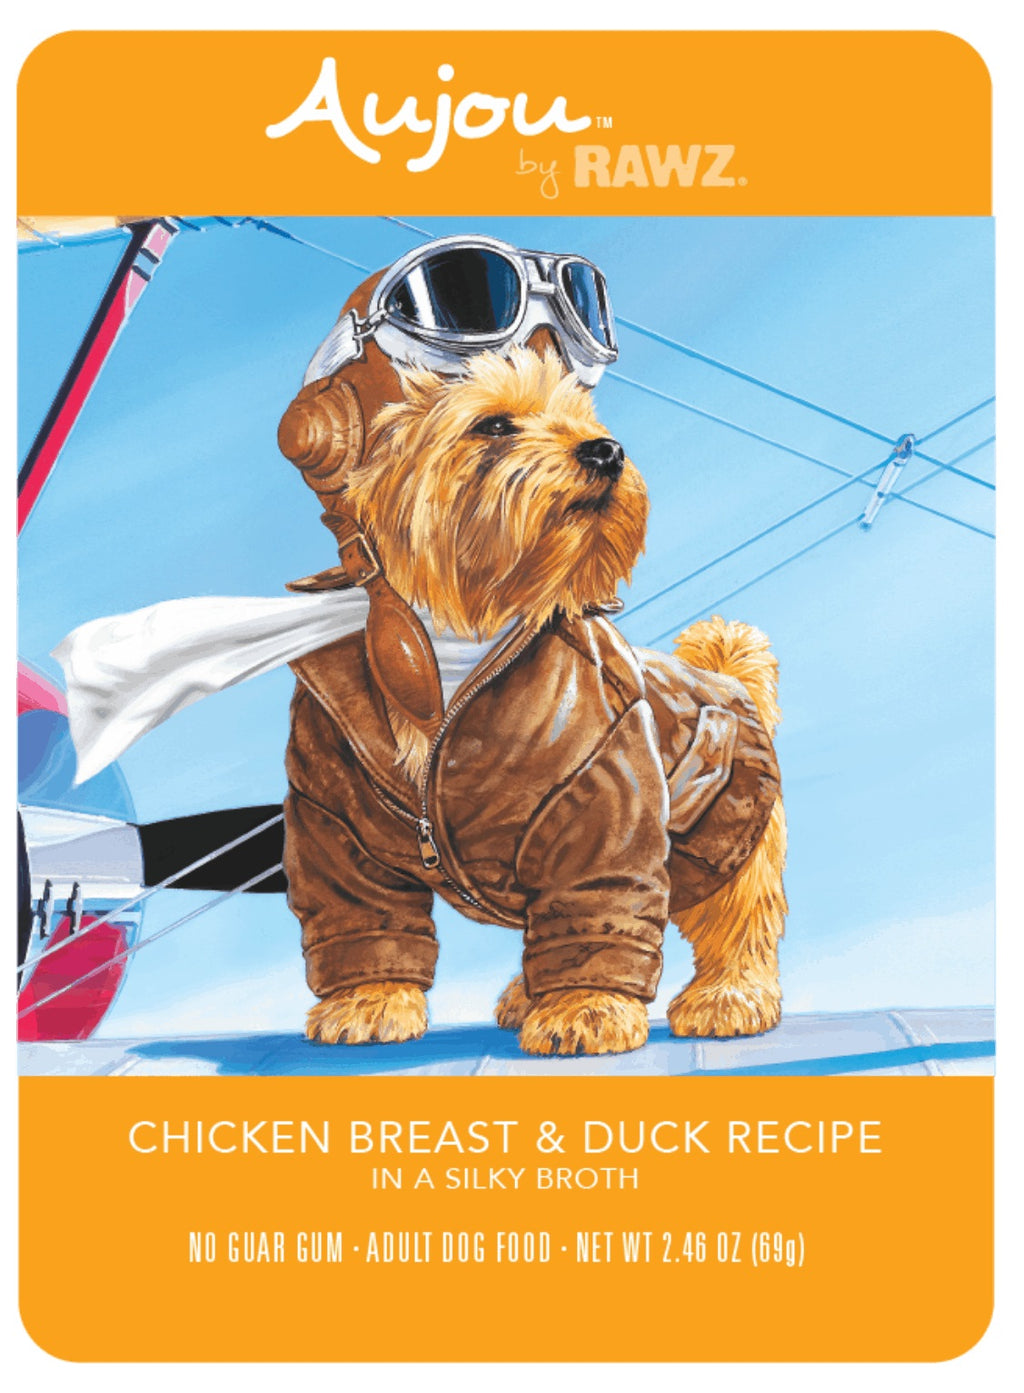 Chicken Breast & Duck Dog Food Recipe by Rawz